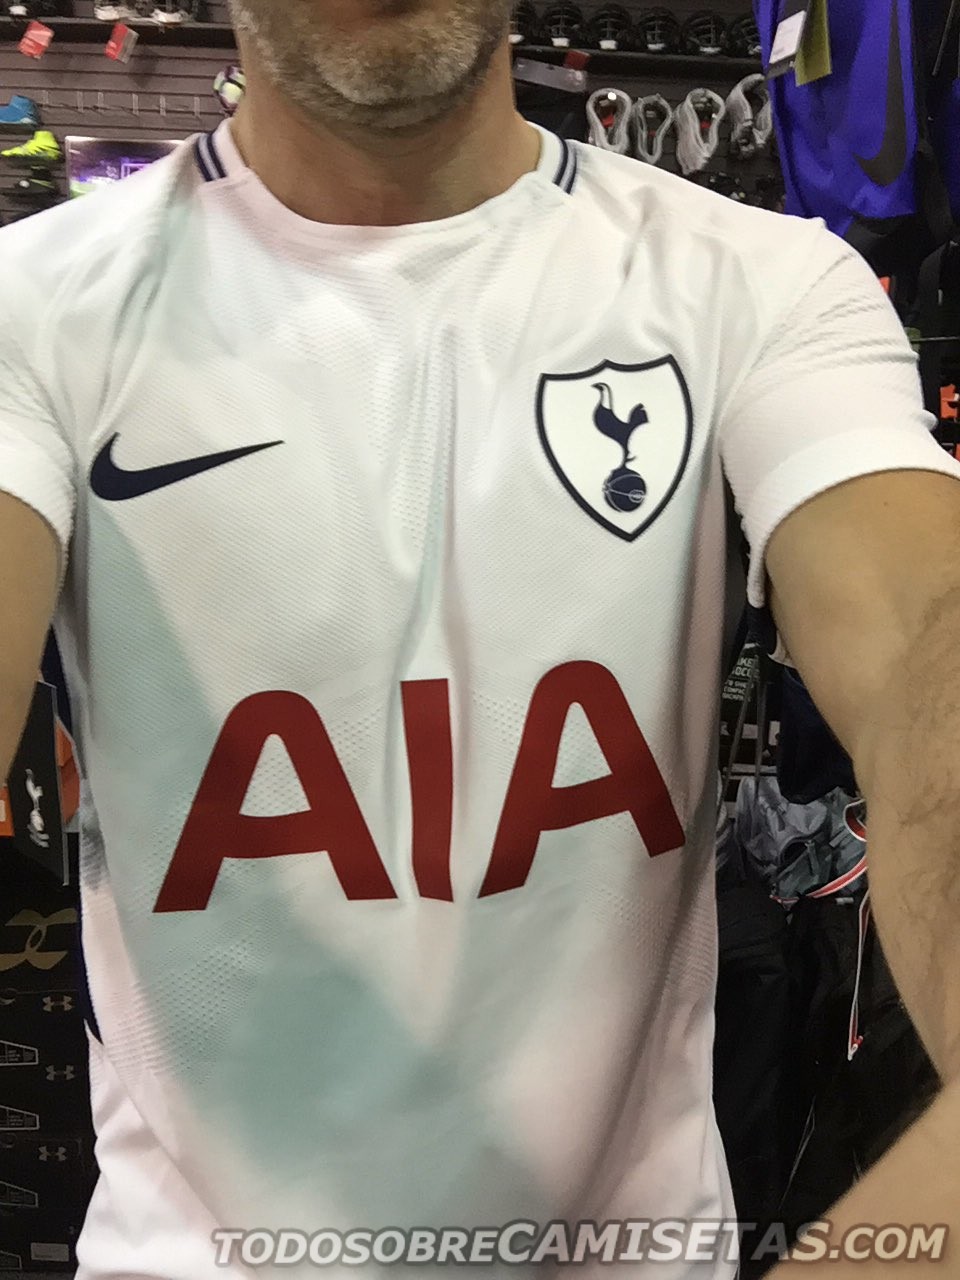 Santuario constantemente Volar cometa Tottenham Hotspur Nike kits 2017-18 LEAKED - Todo Sobre Camisetas